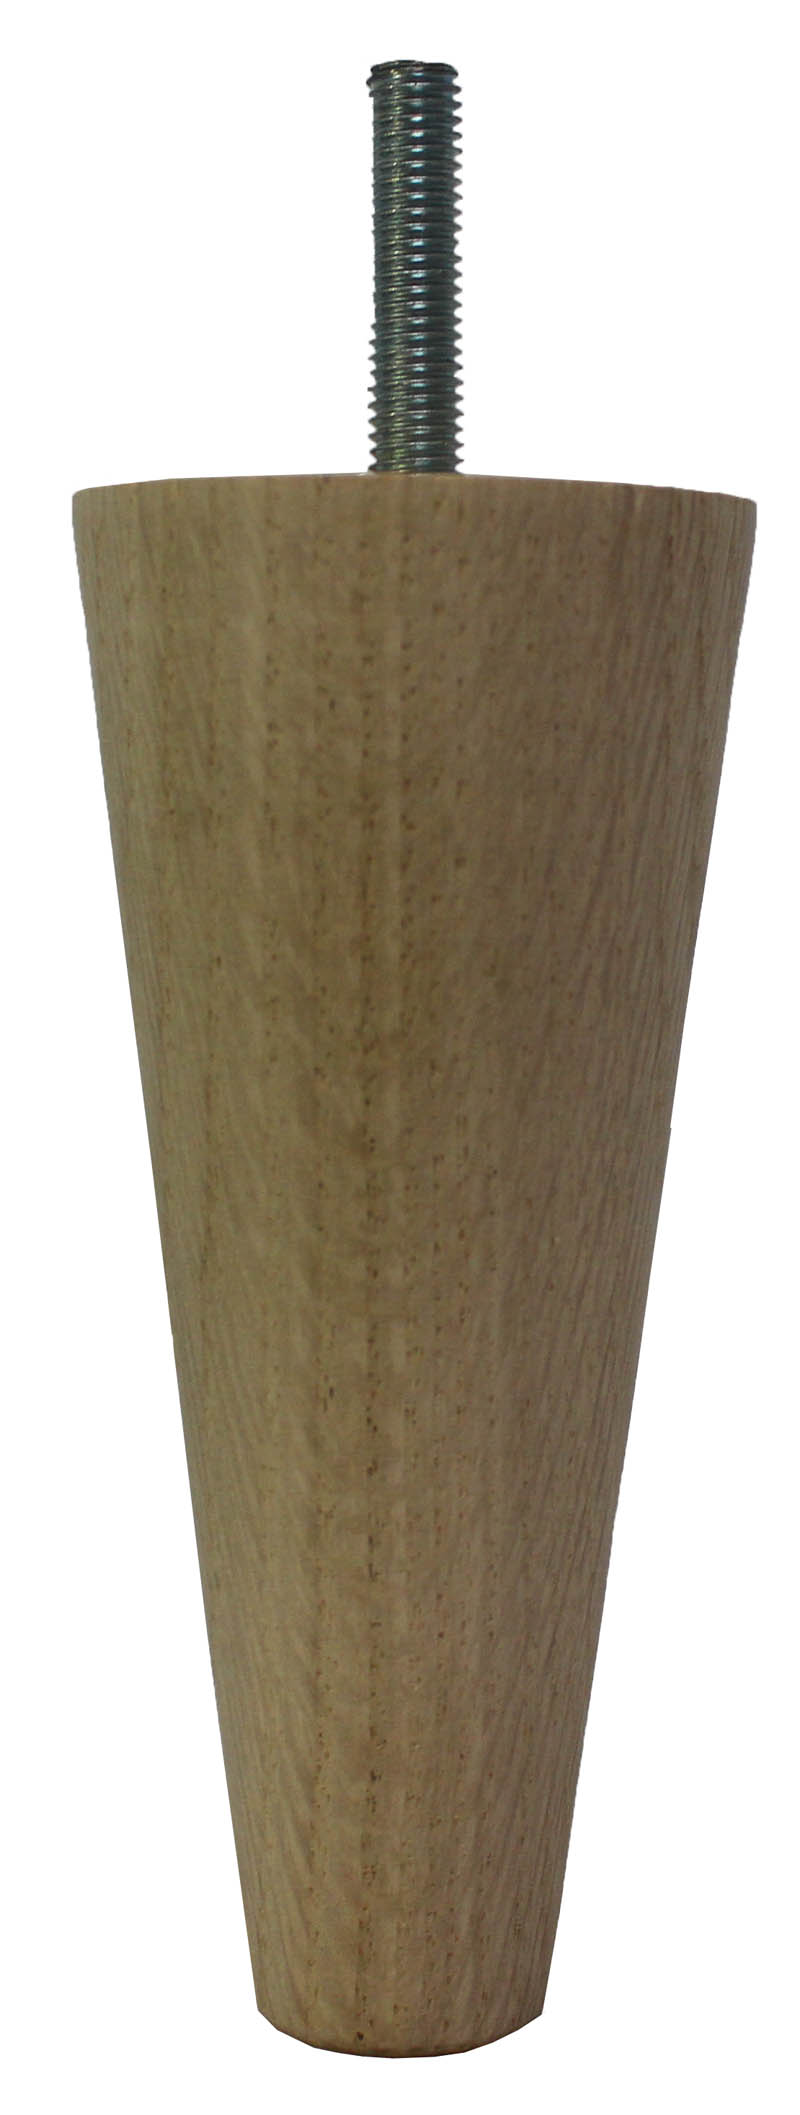 Toriana Solid Oak Tapered Furniture Legs - Raw Finish - Set of 4